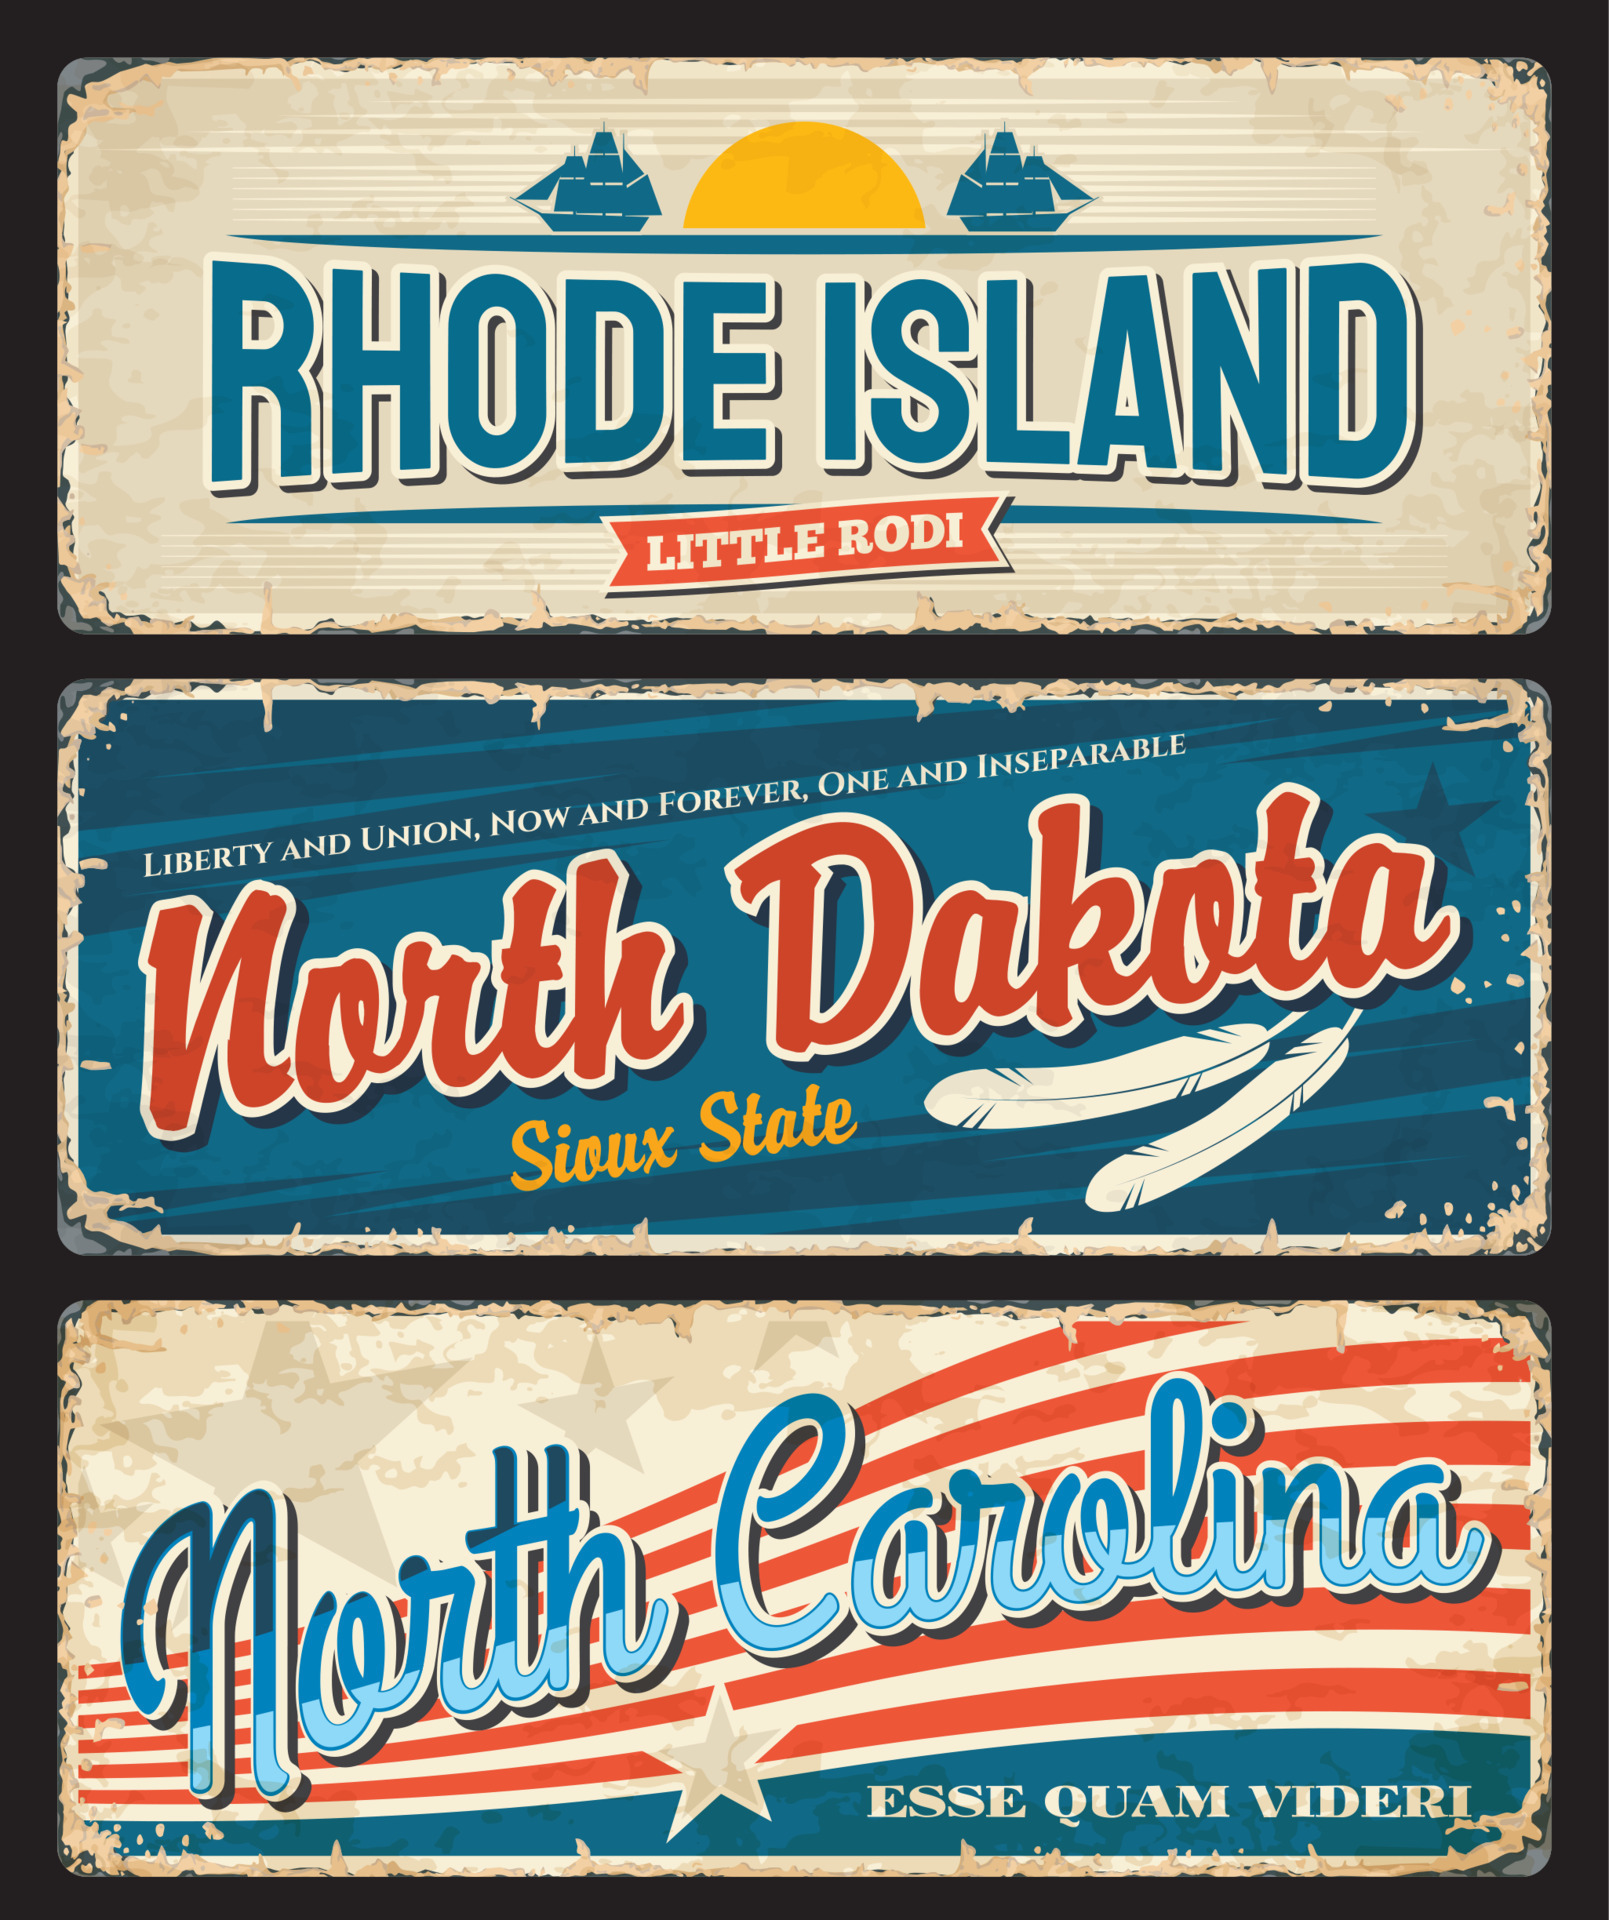 USA states Rhode Island Dakota, Carolina plates 23591340 Vector